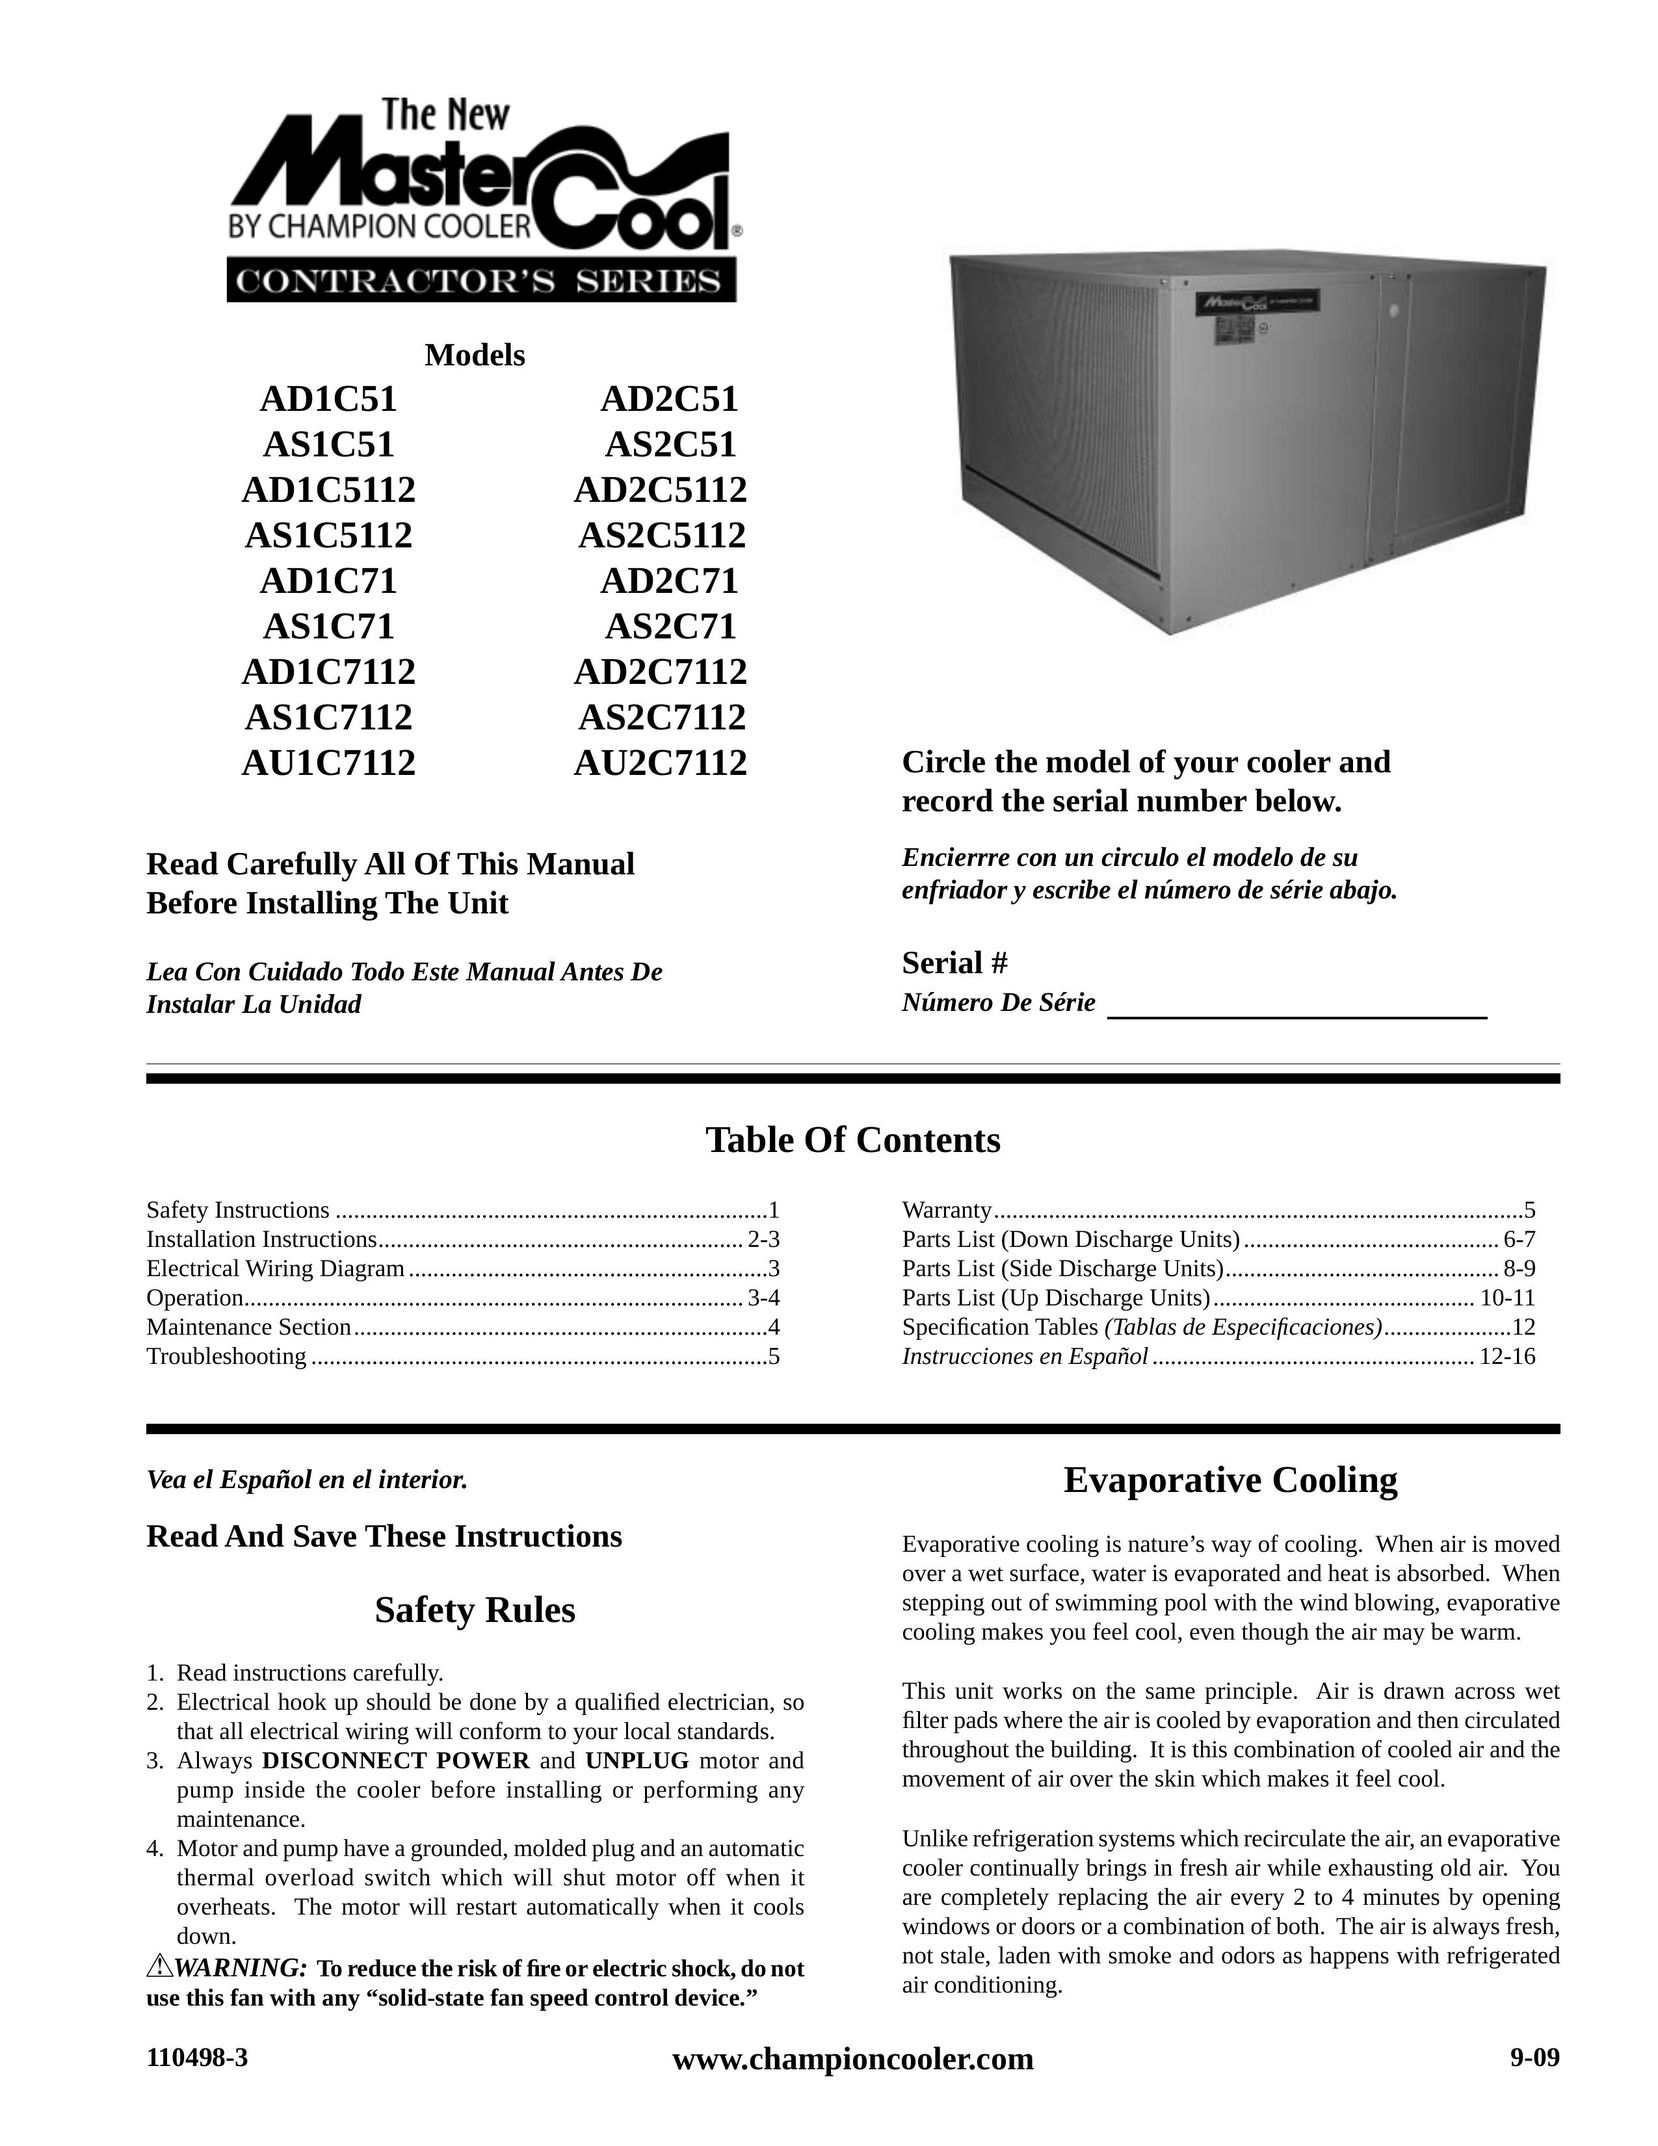 Essick Air AD2C7112 Fan User Manual